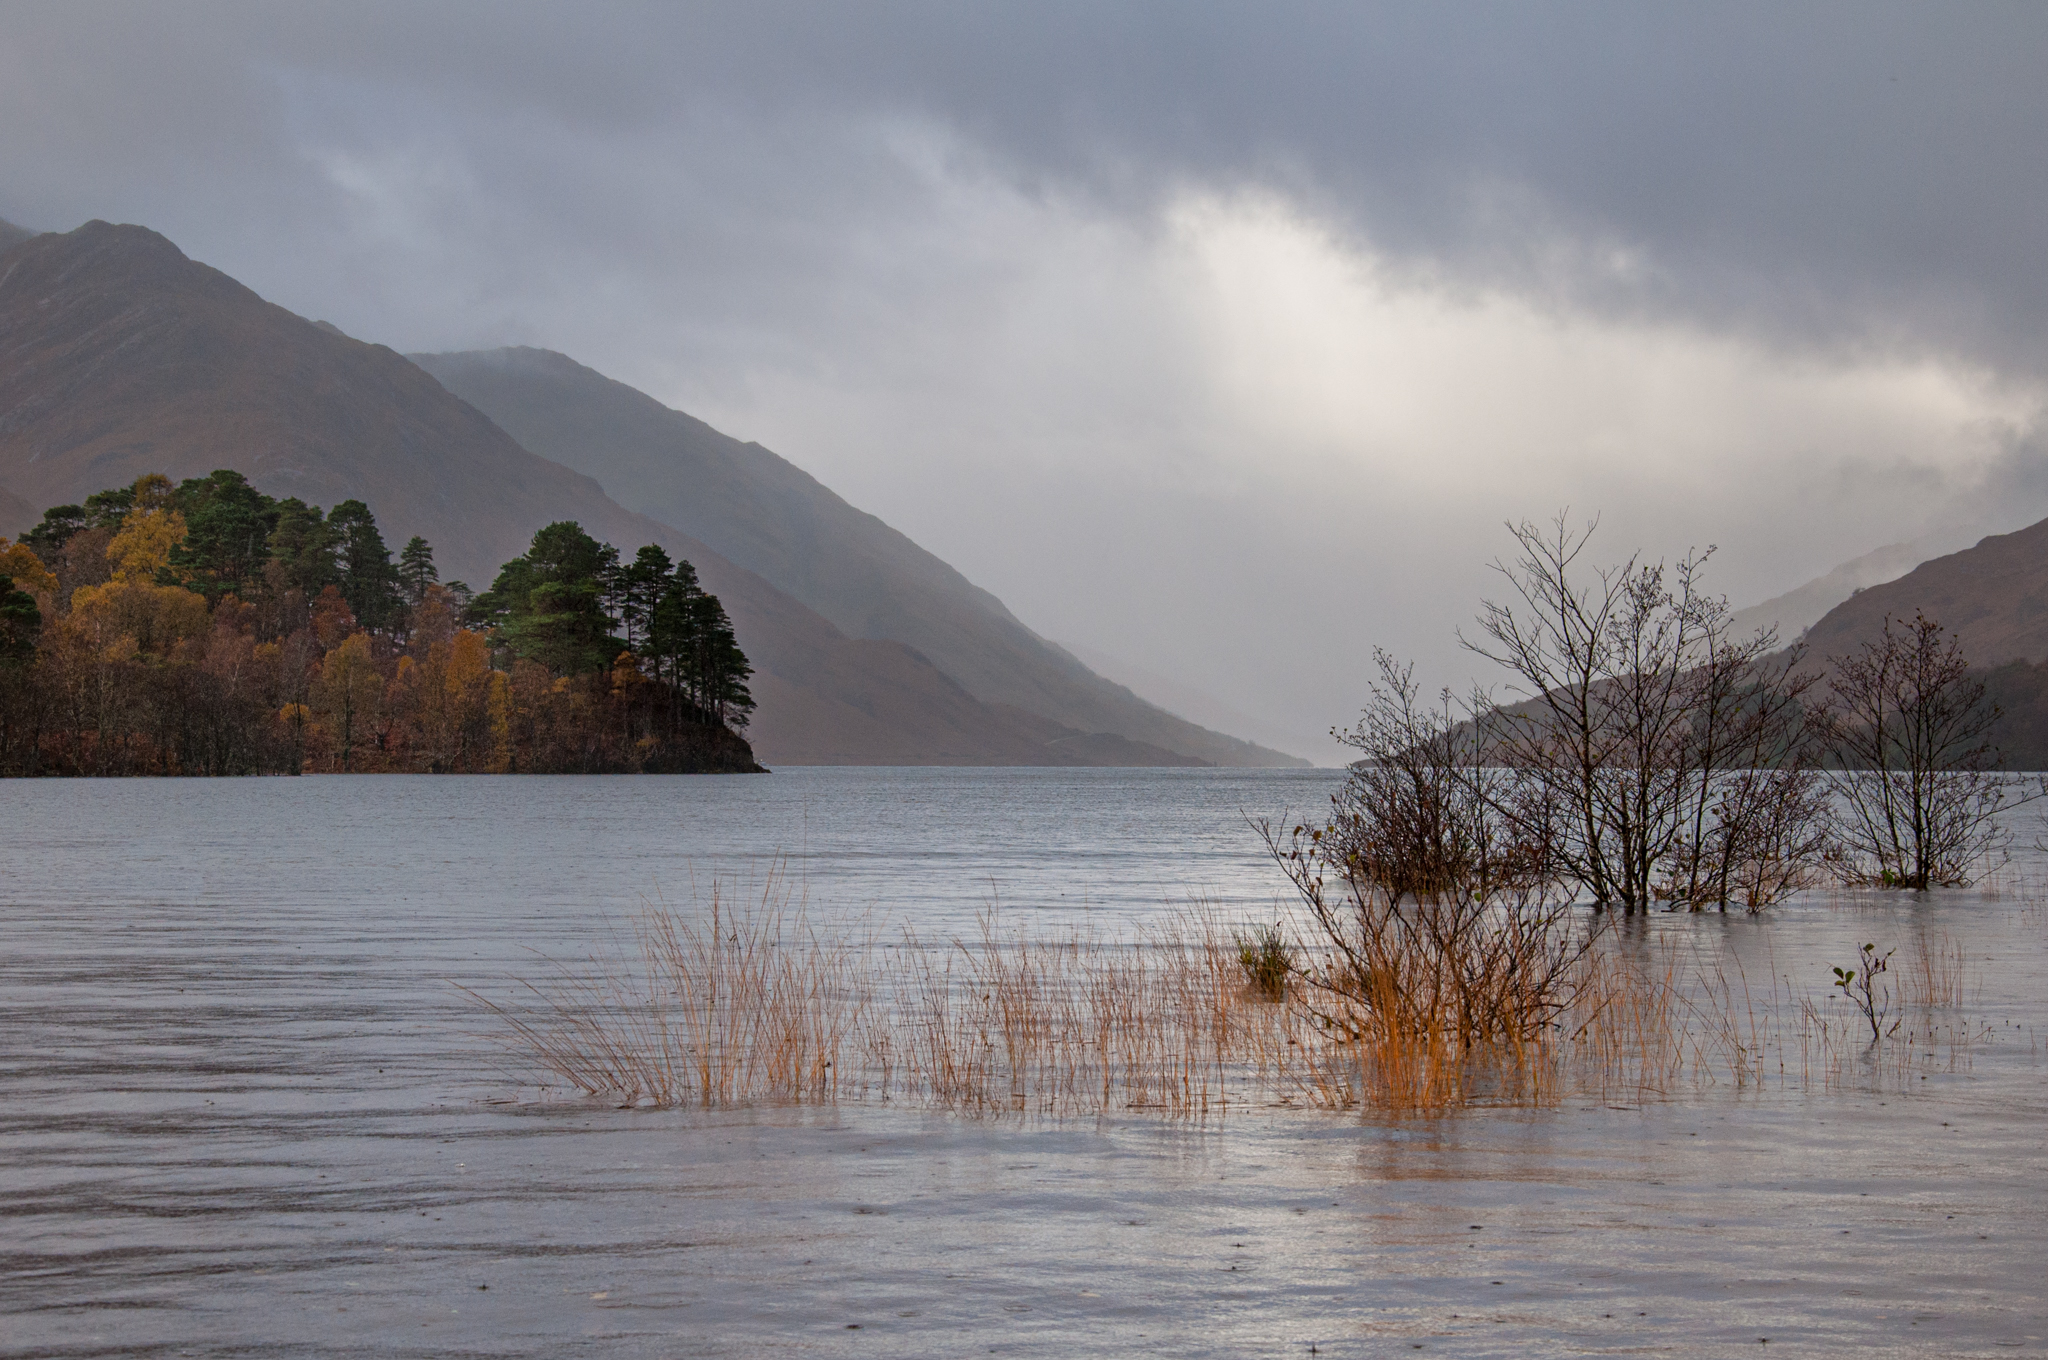 Trees lie submerged in Loch Shiel after heavy rain